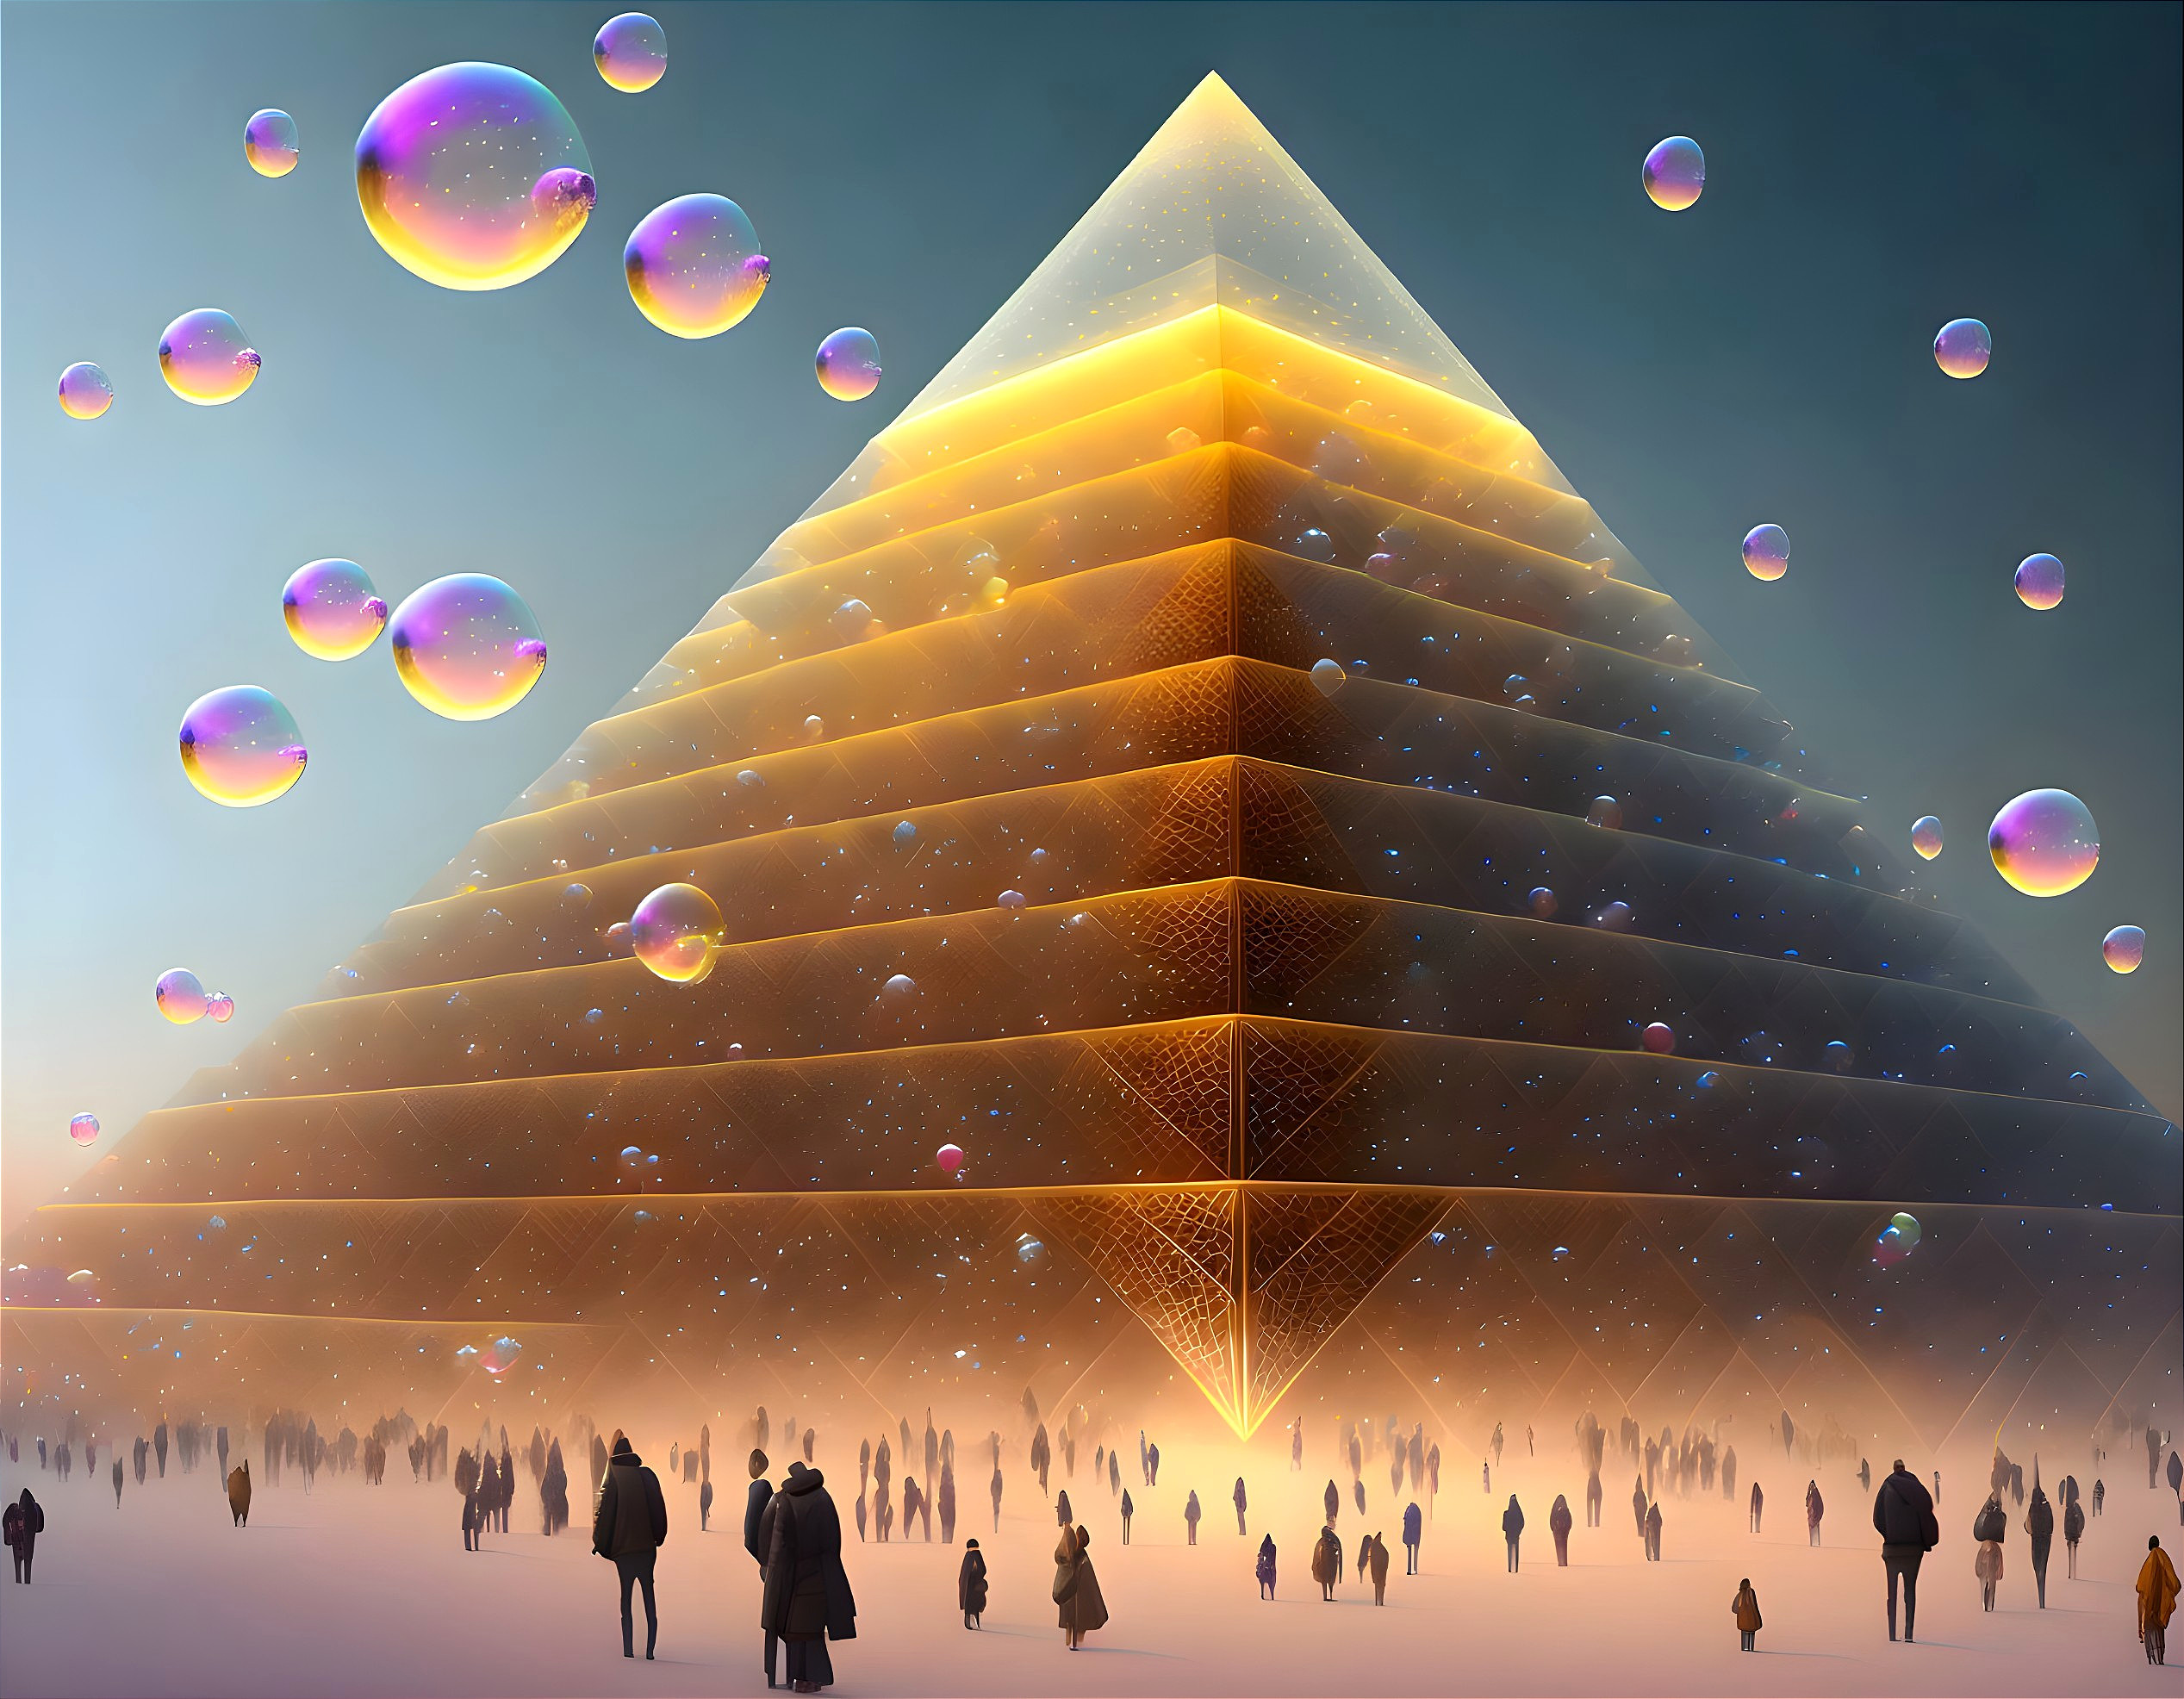 A social pyramid scheme to capture human souls